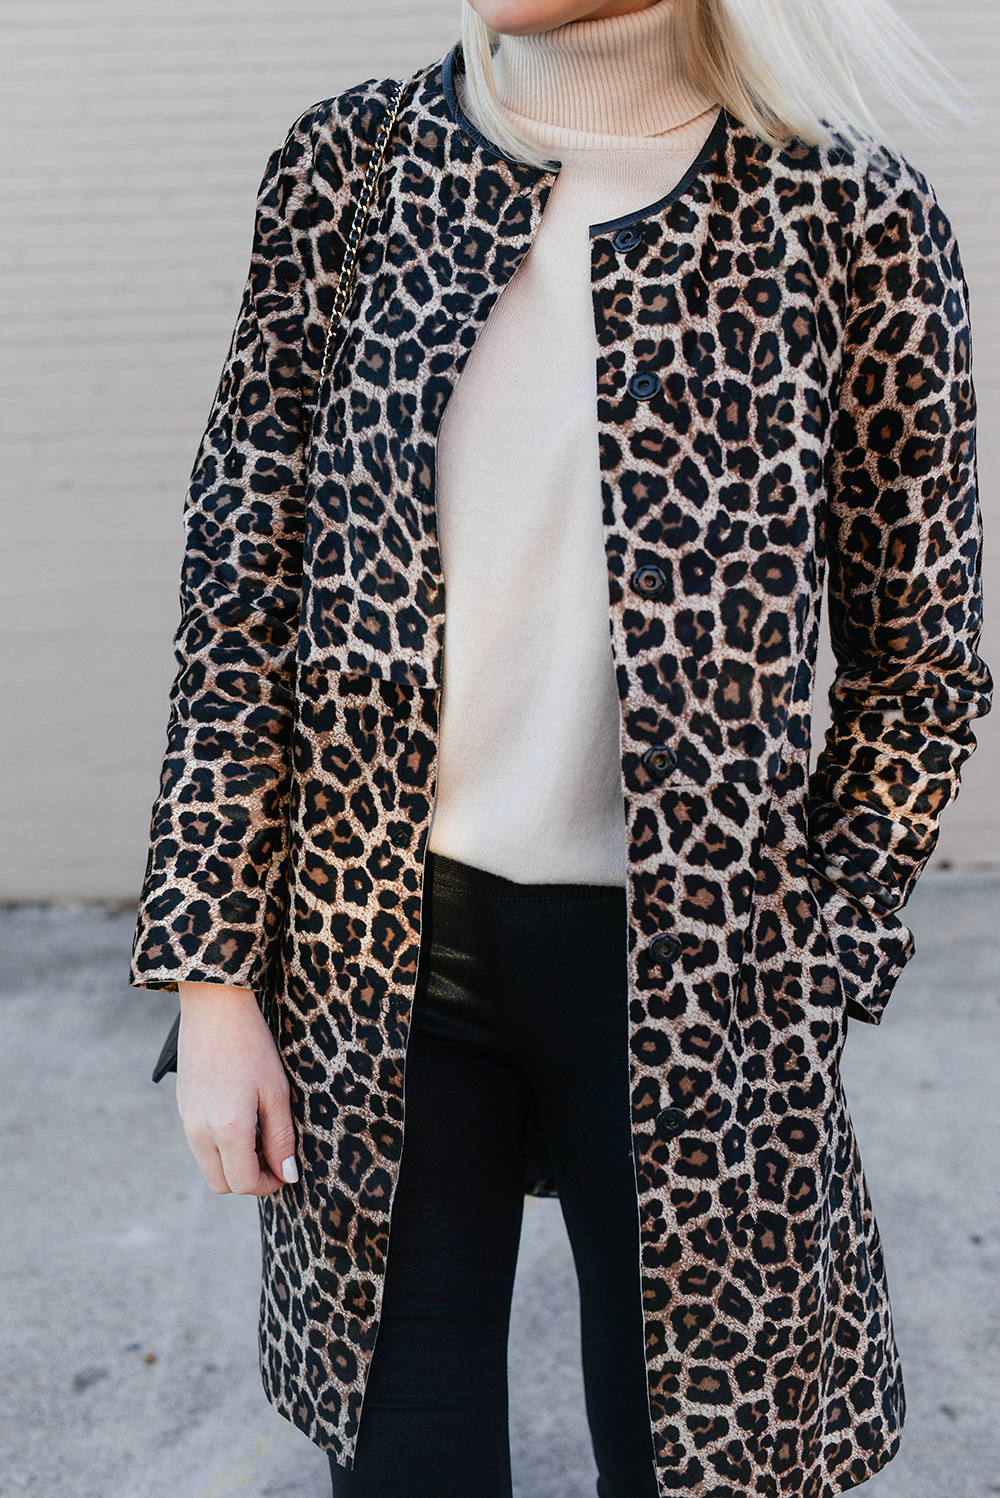 Best Leopard Coats of 2018 | Dallas Fashion Blog